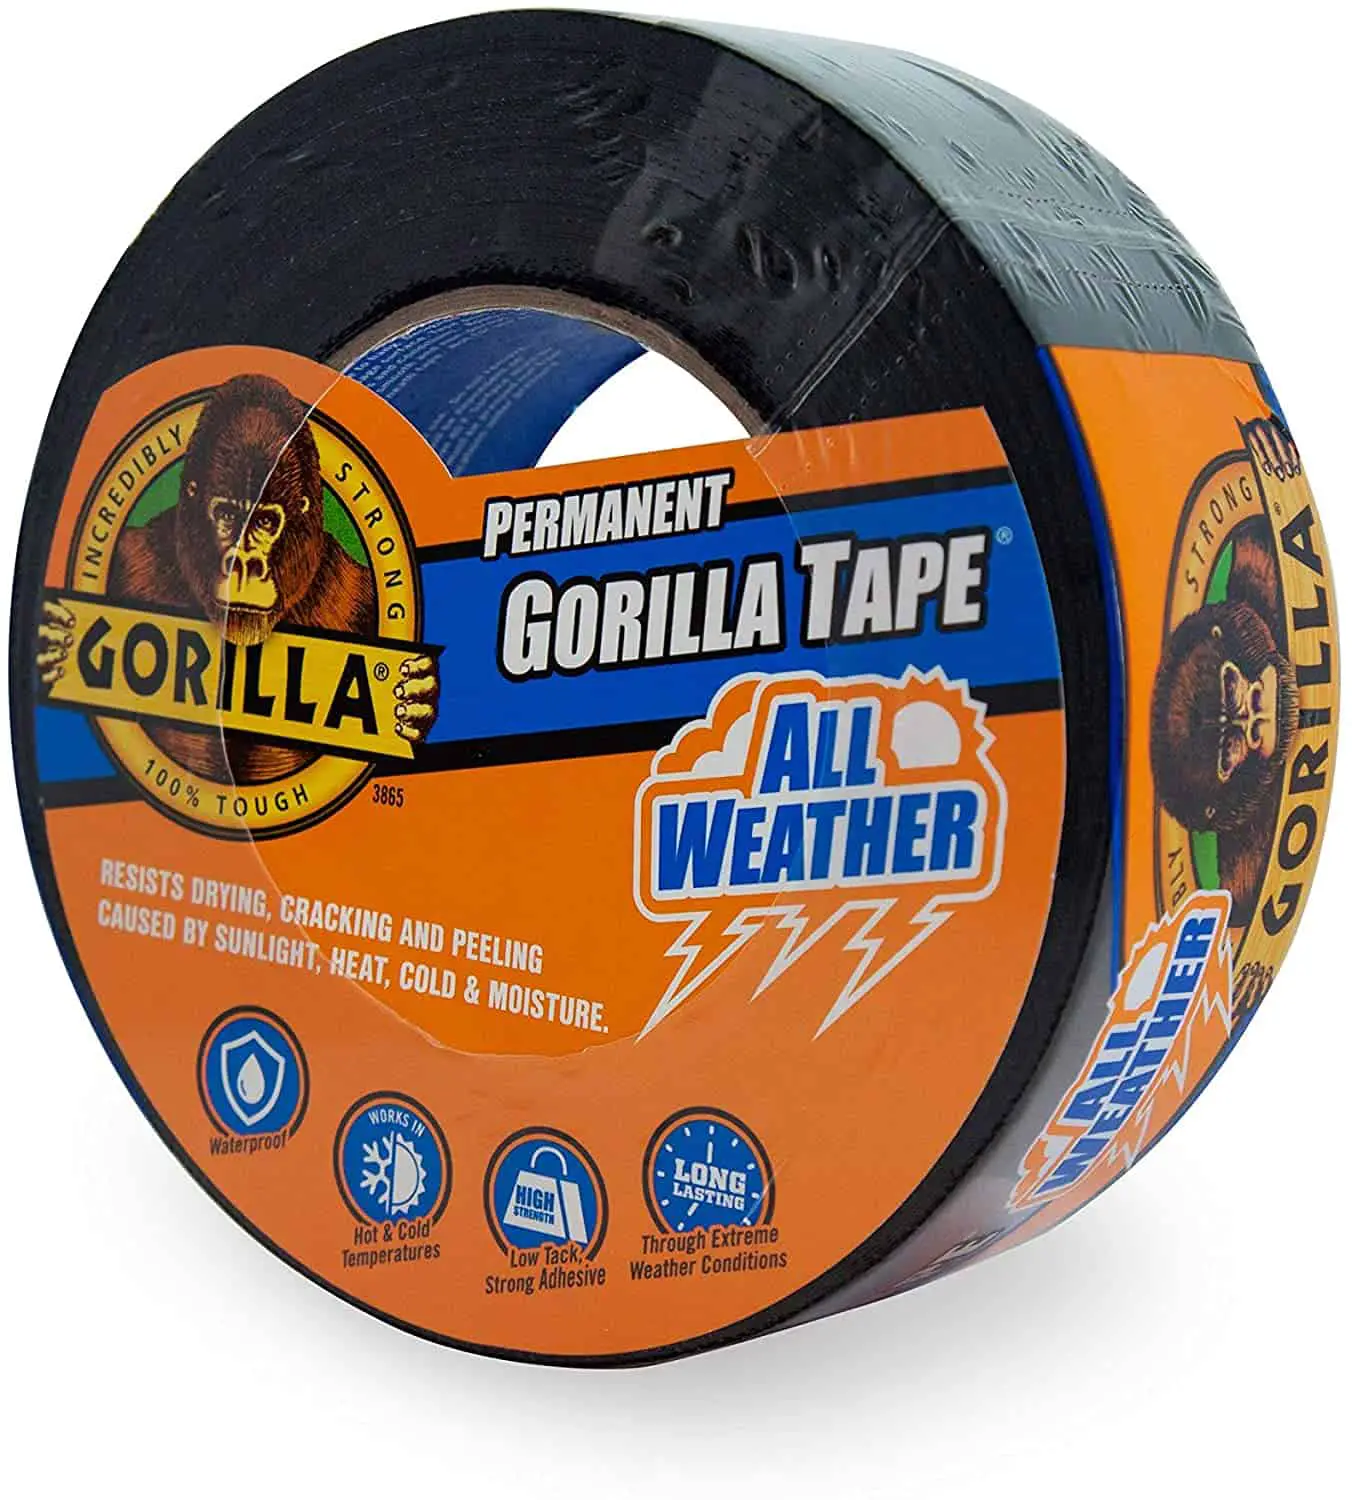 Best waterproof tape for outdoor use- Gorilla All Weather Outdoor Waterproof Duct Tape